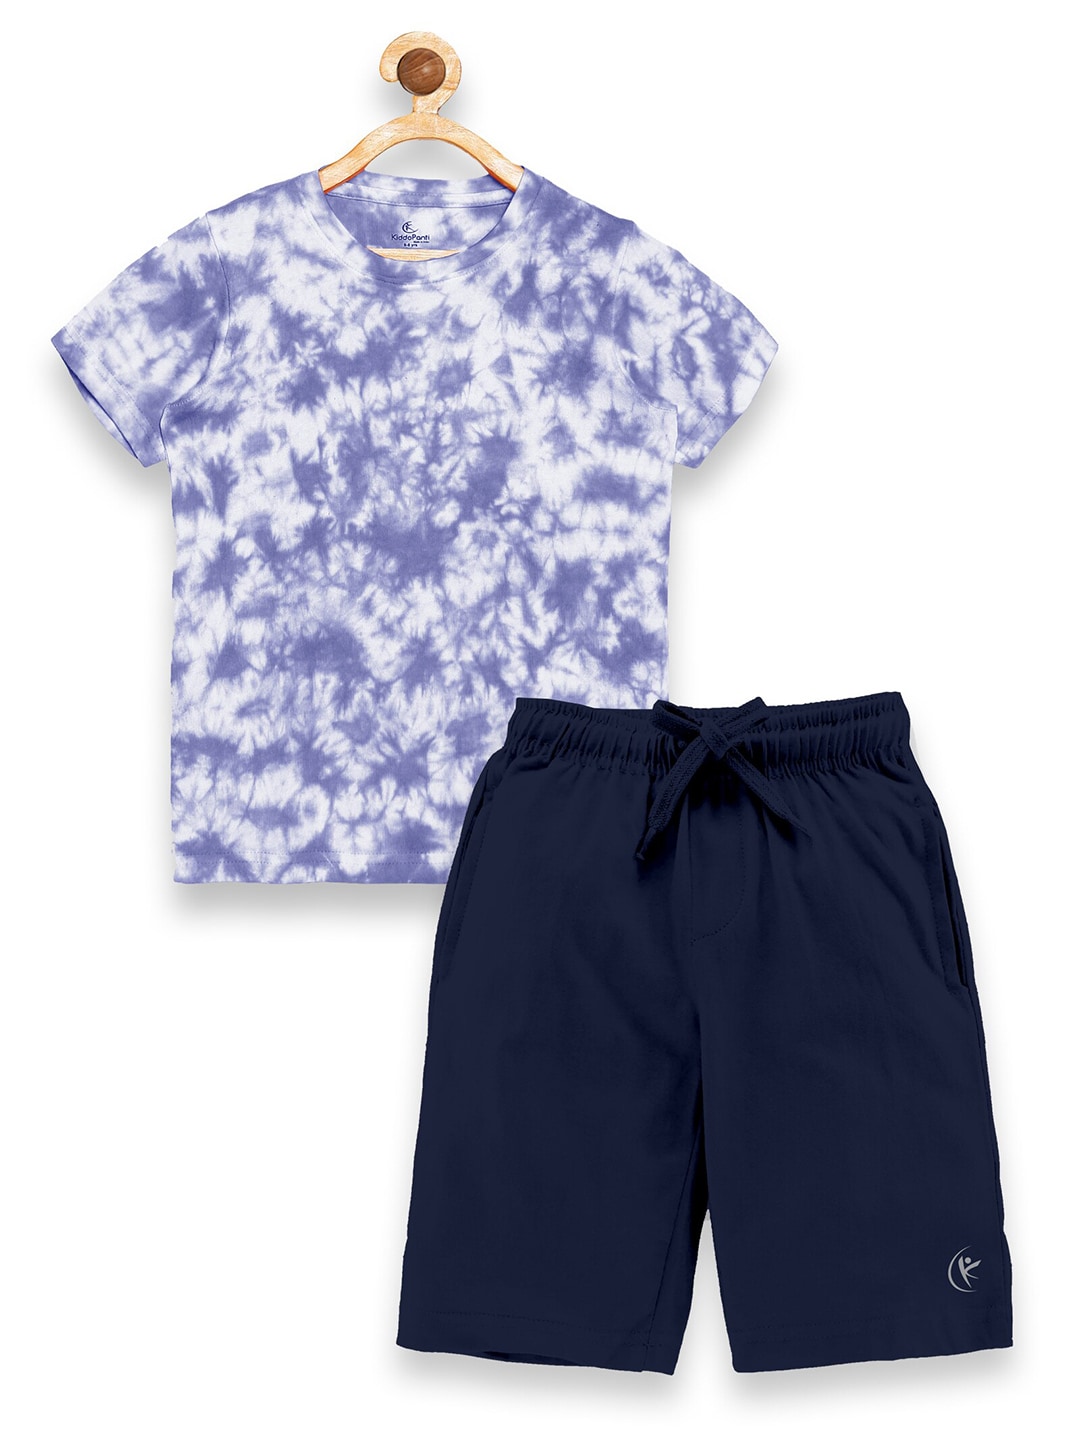 KiddoPanti Boys Navy Blue & Grey Printed Pure Cotton T-shirt with Shorts